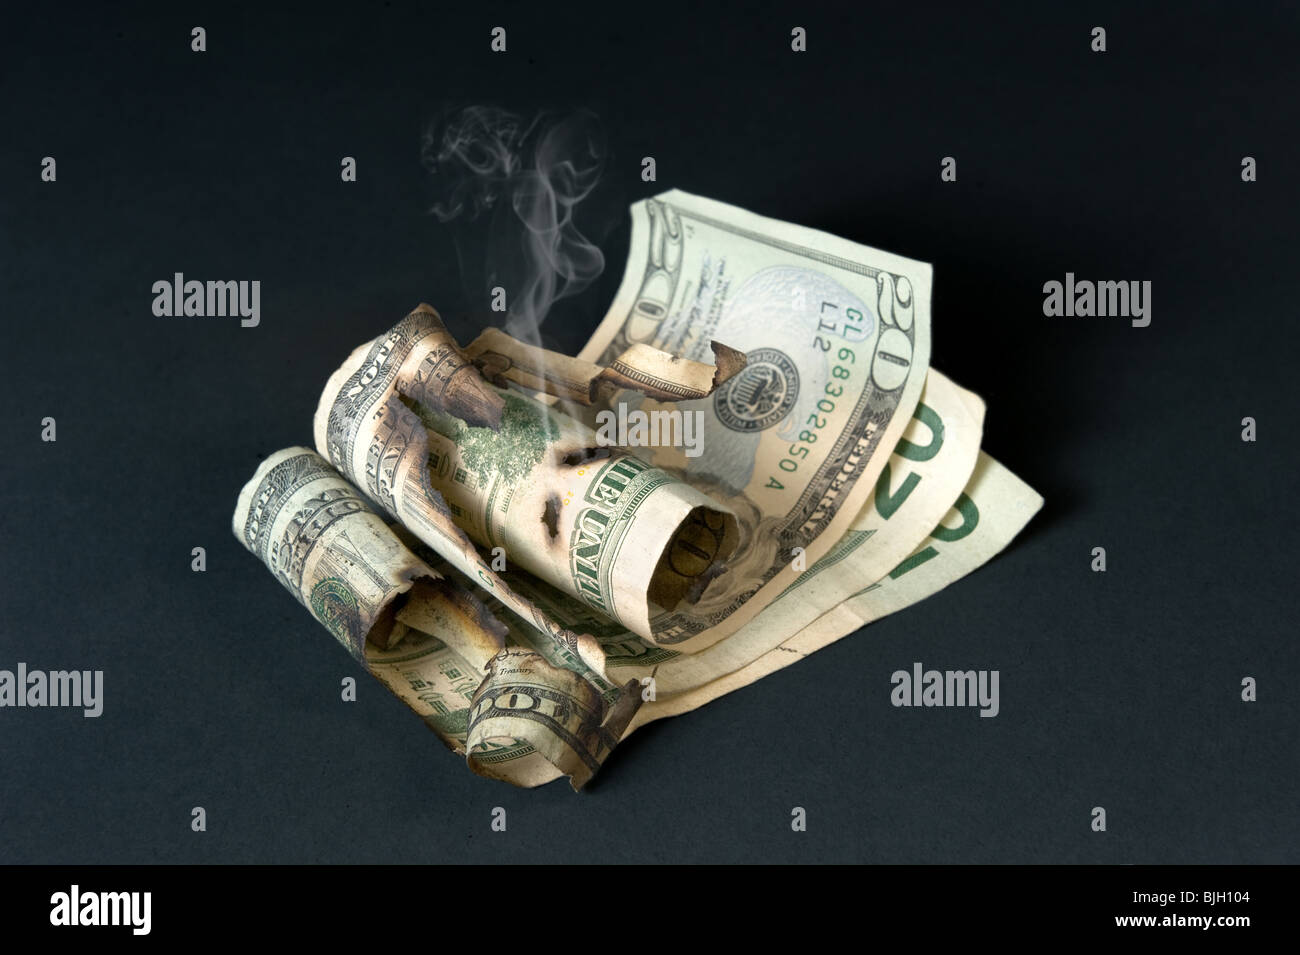 Burned 20 dollar bills smoldering against a dark background. Stock Photo